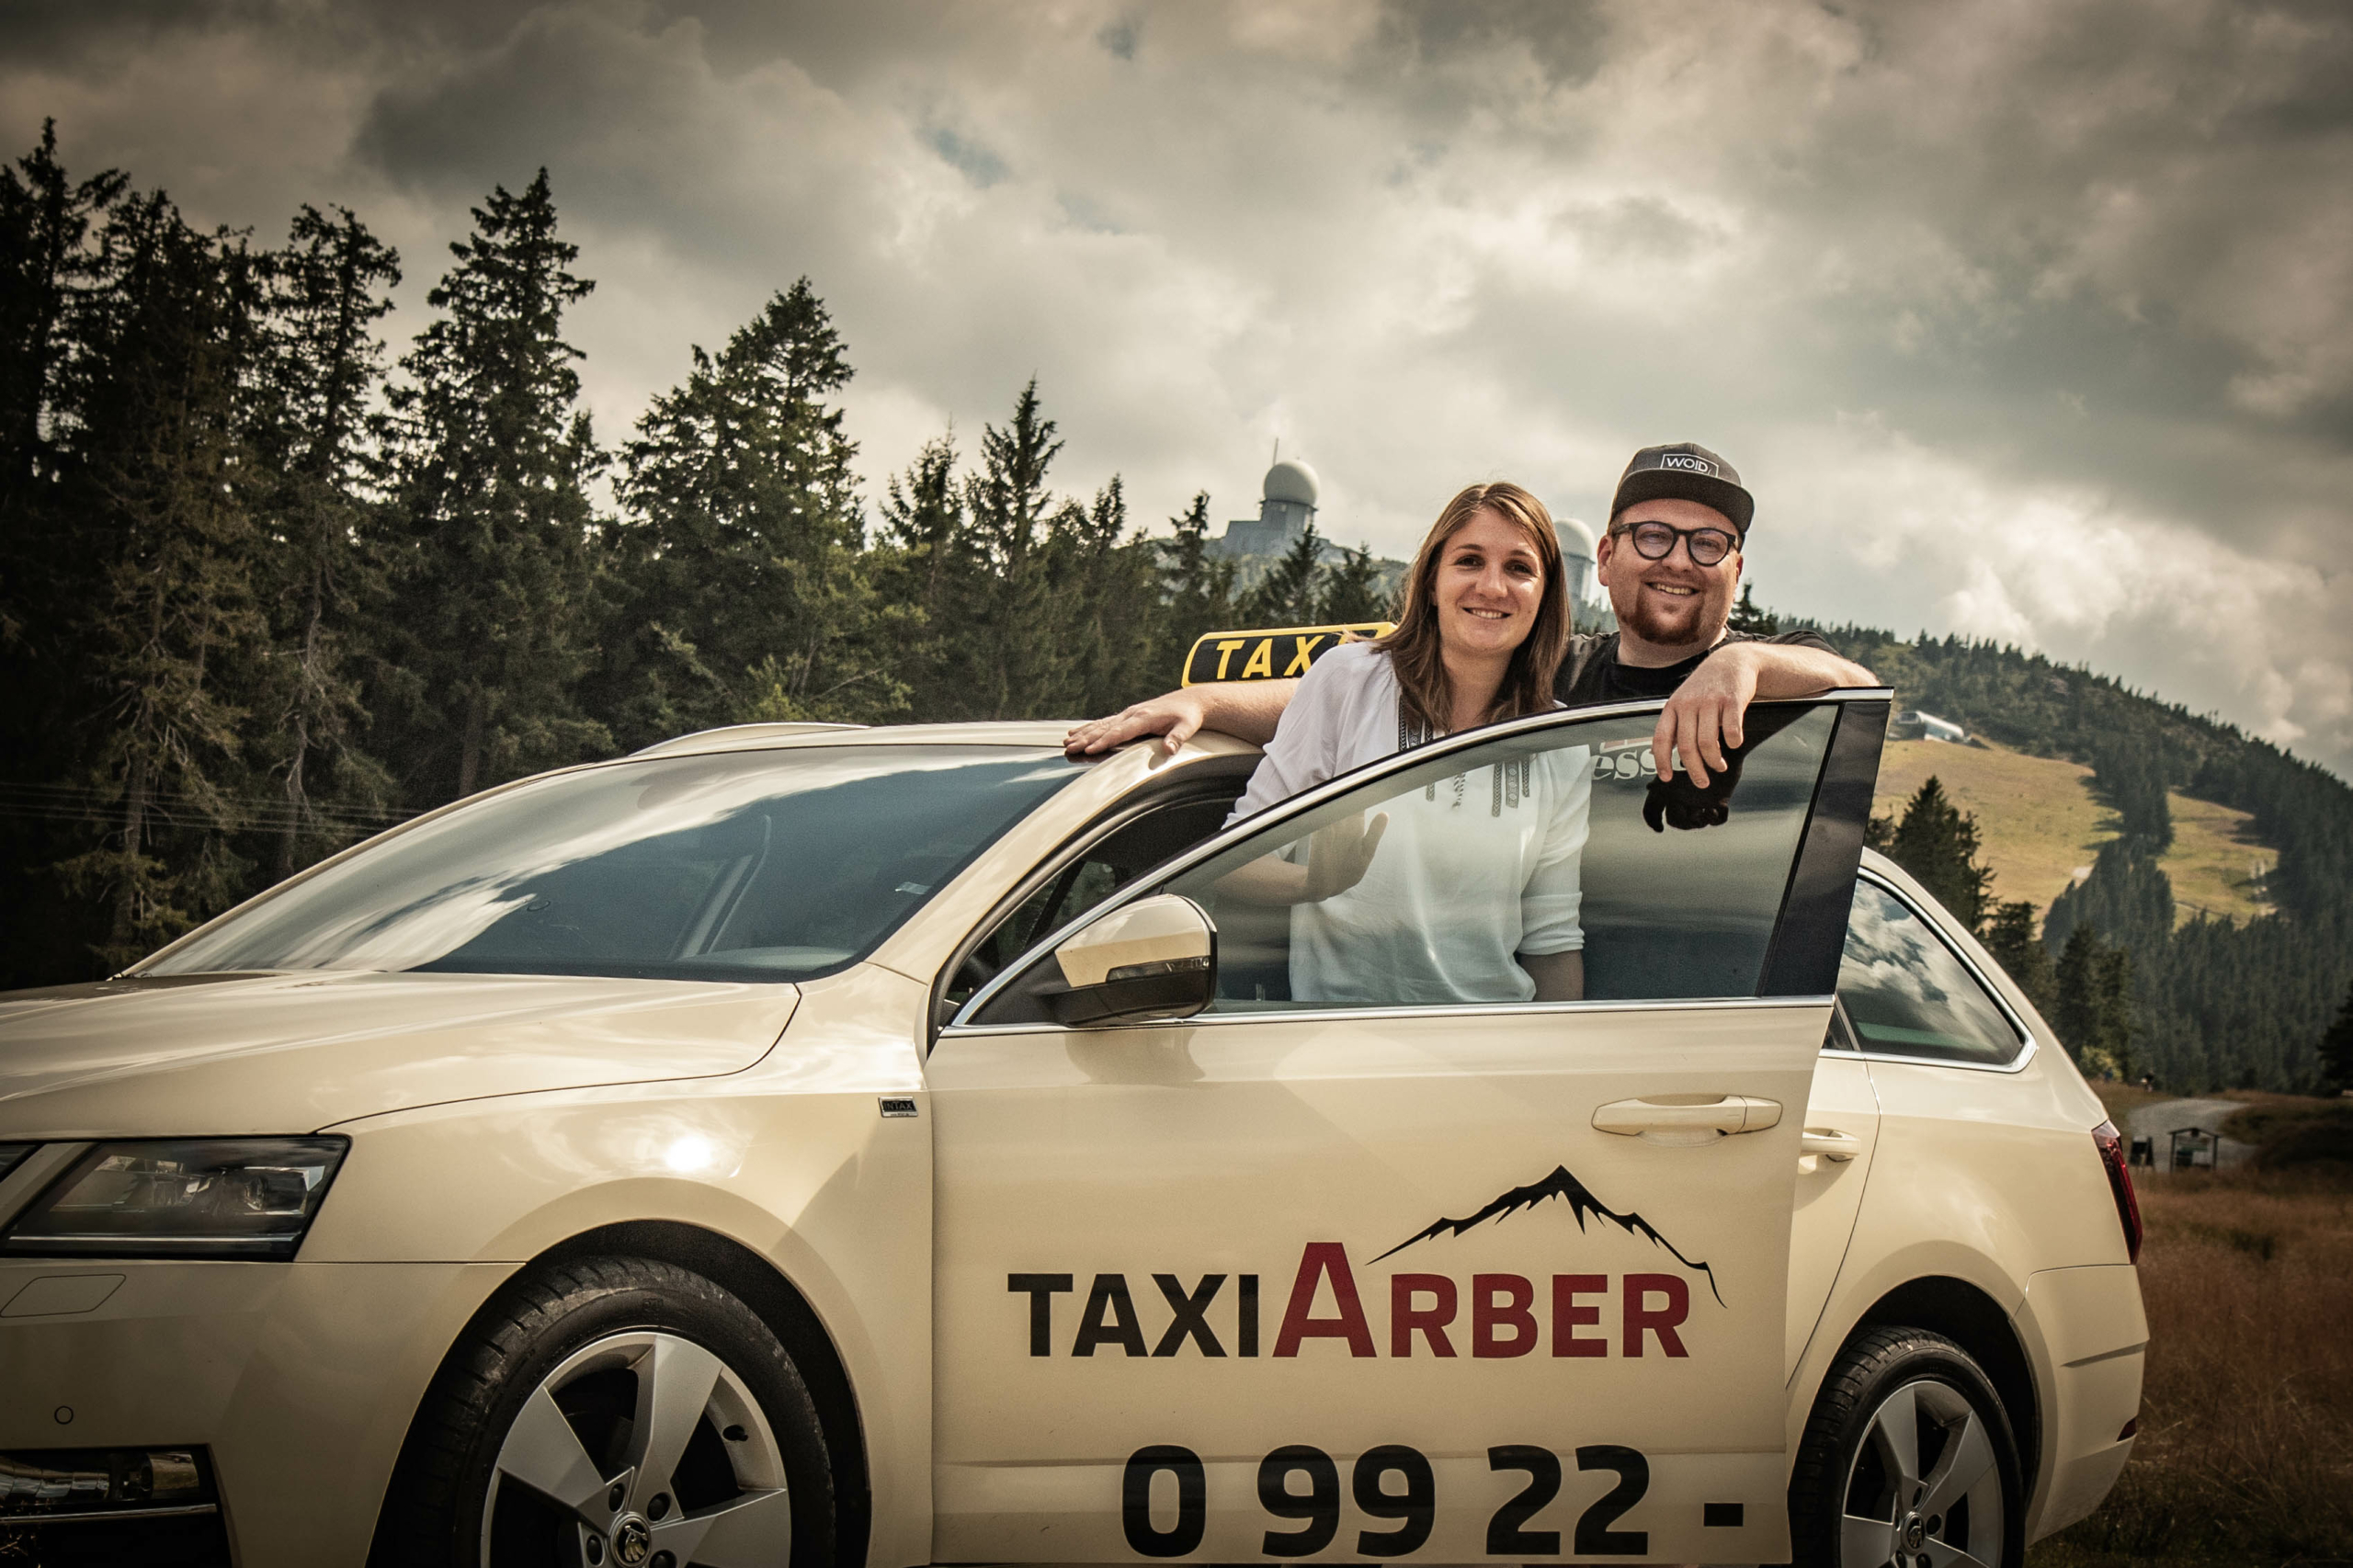 Taxi Arber - Josef und Sandra Sperl